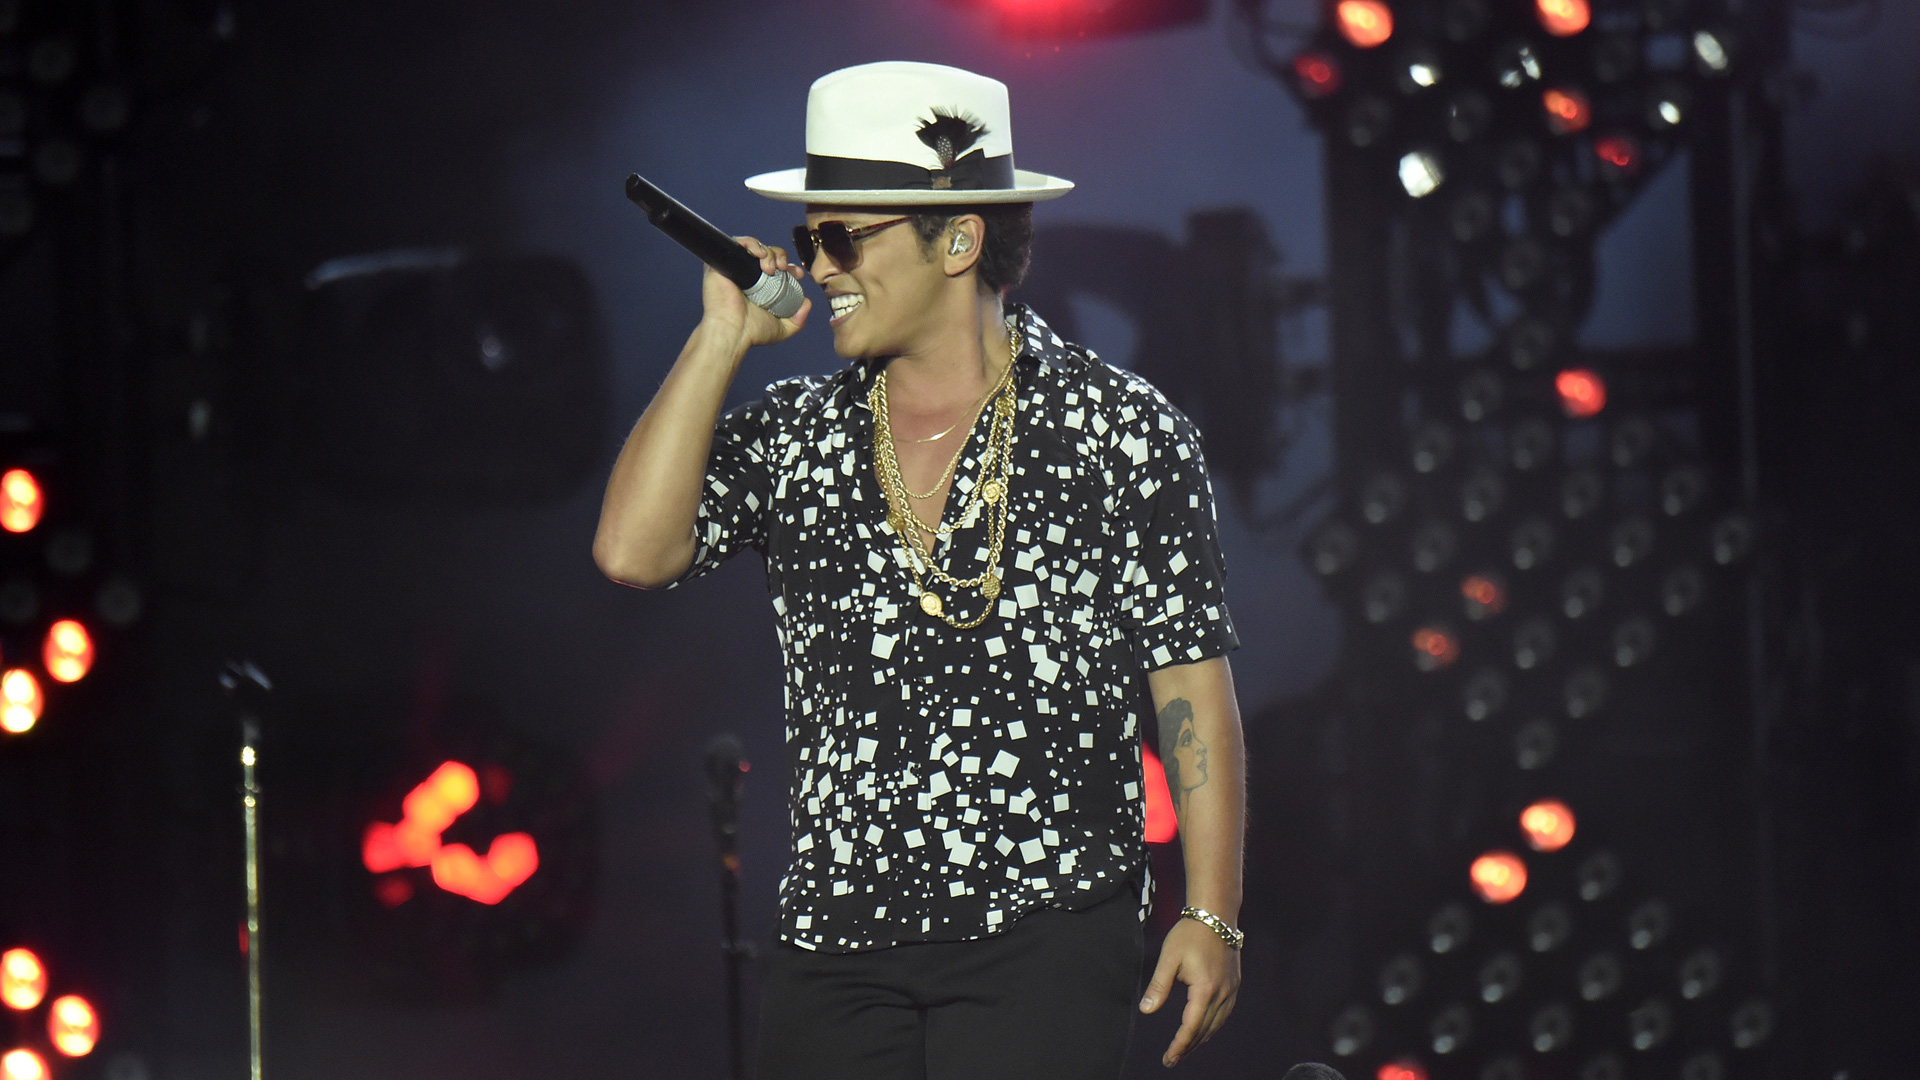 Bruno Mars revela un nuevo tema “Versace on the Floor”. Cúsica Plus